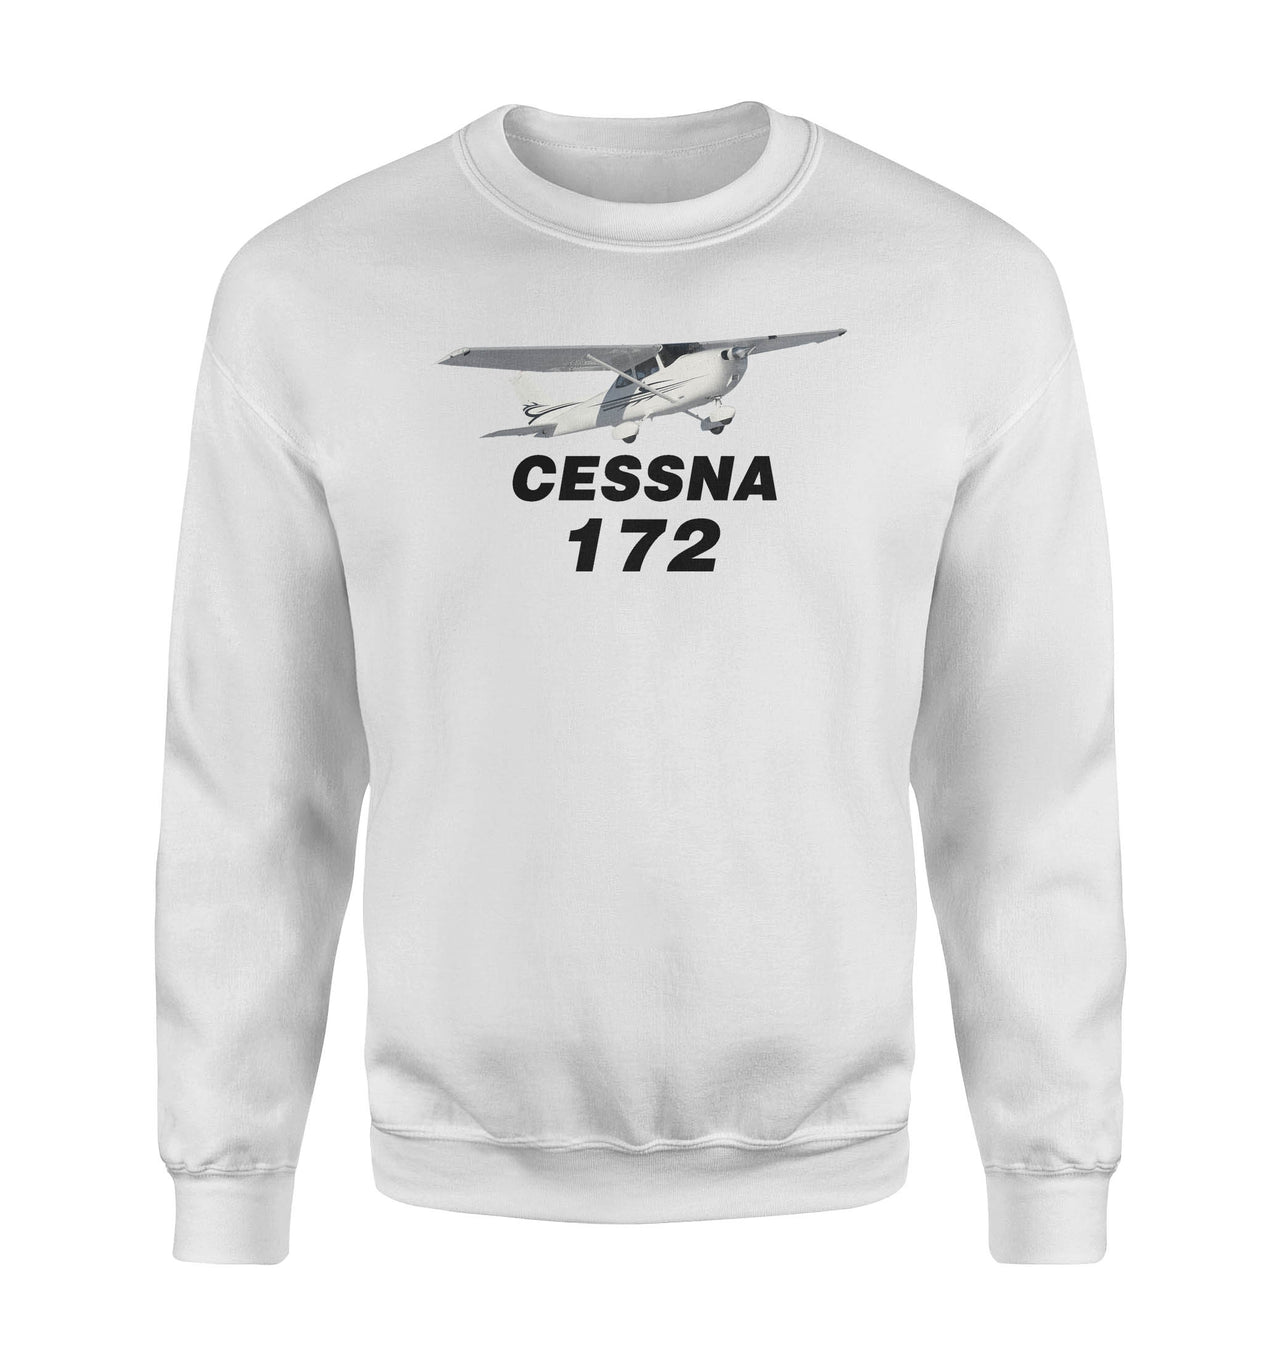 The Cessna 172 Designed Sweatshirts